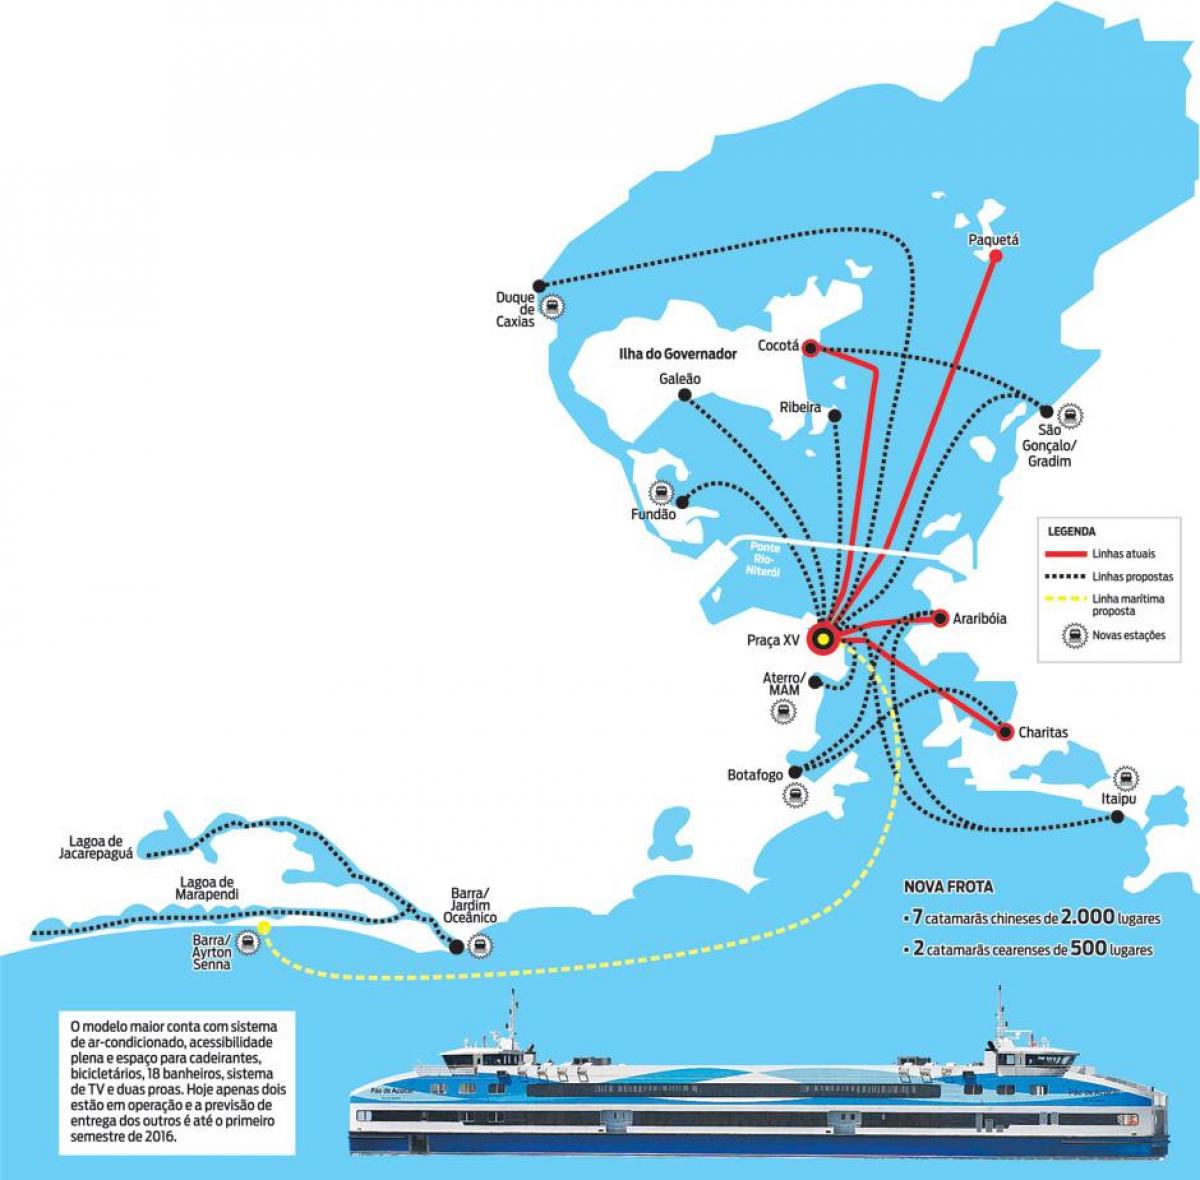 Karta över CCR Barcas